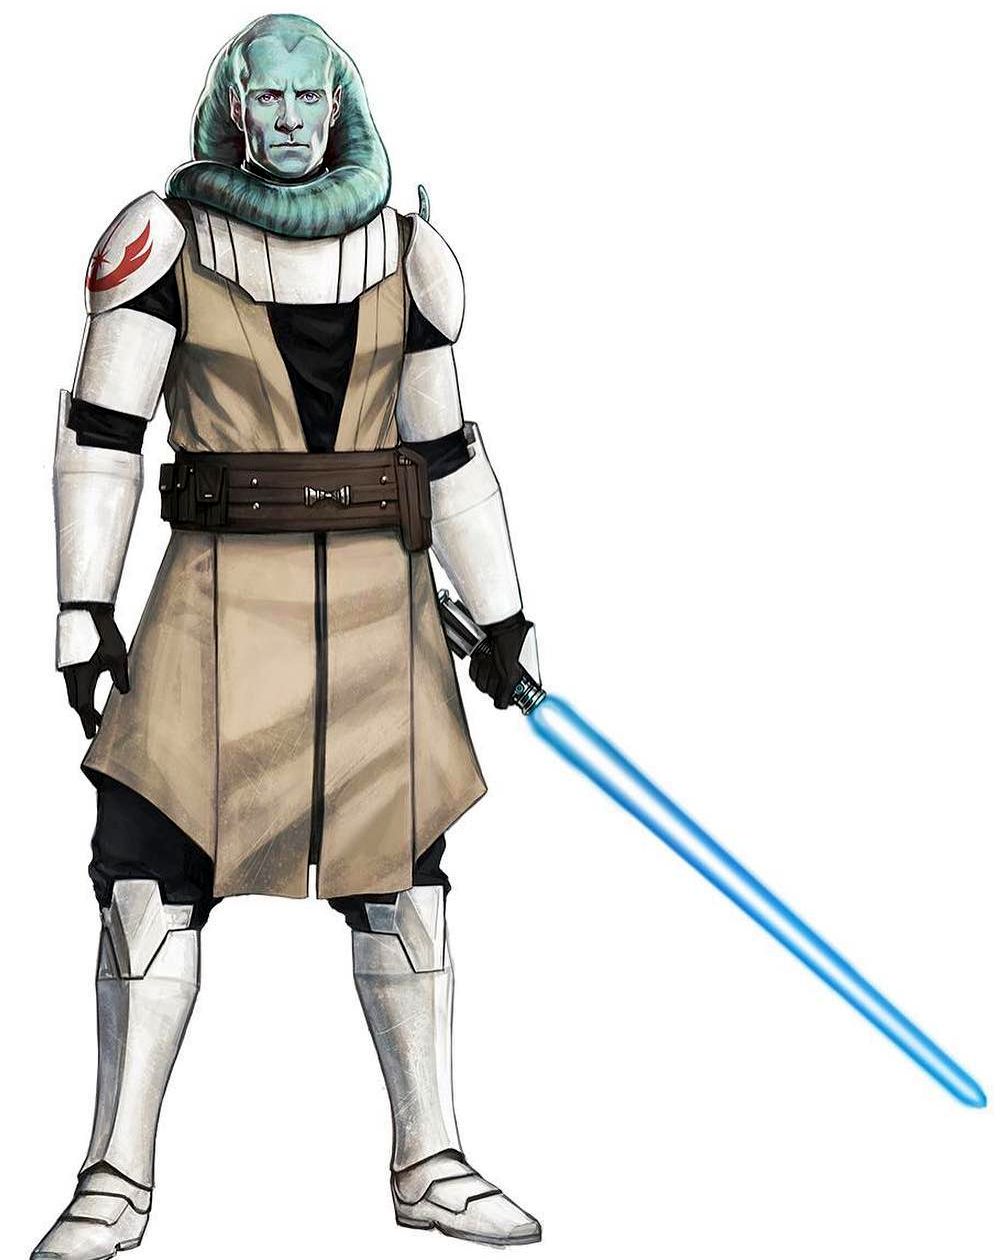 Jedi Commander armor